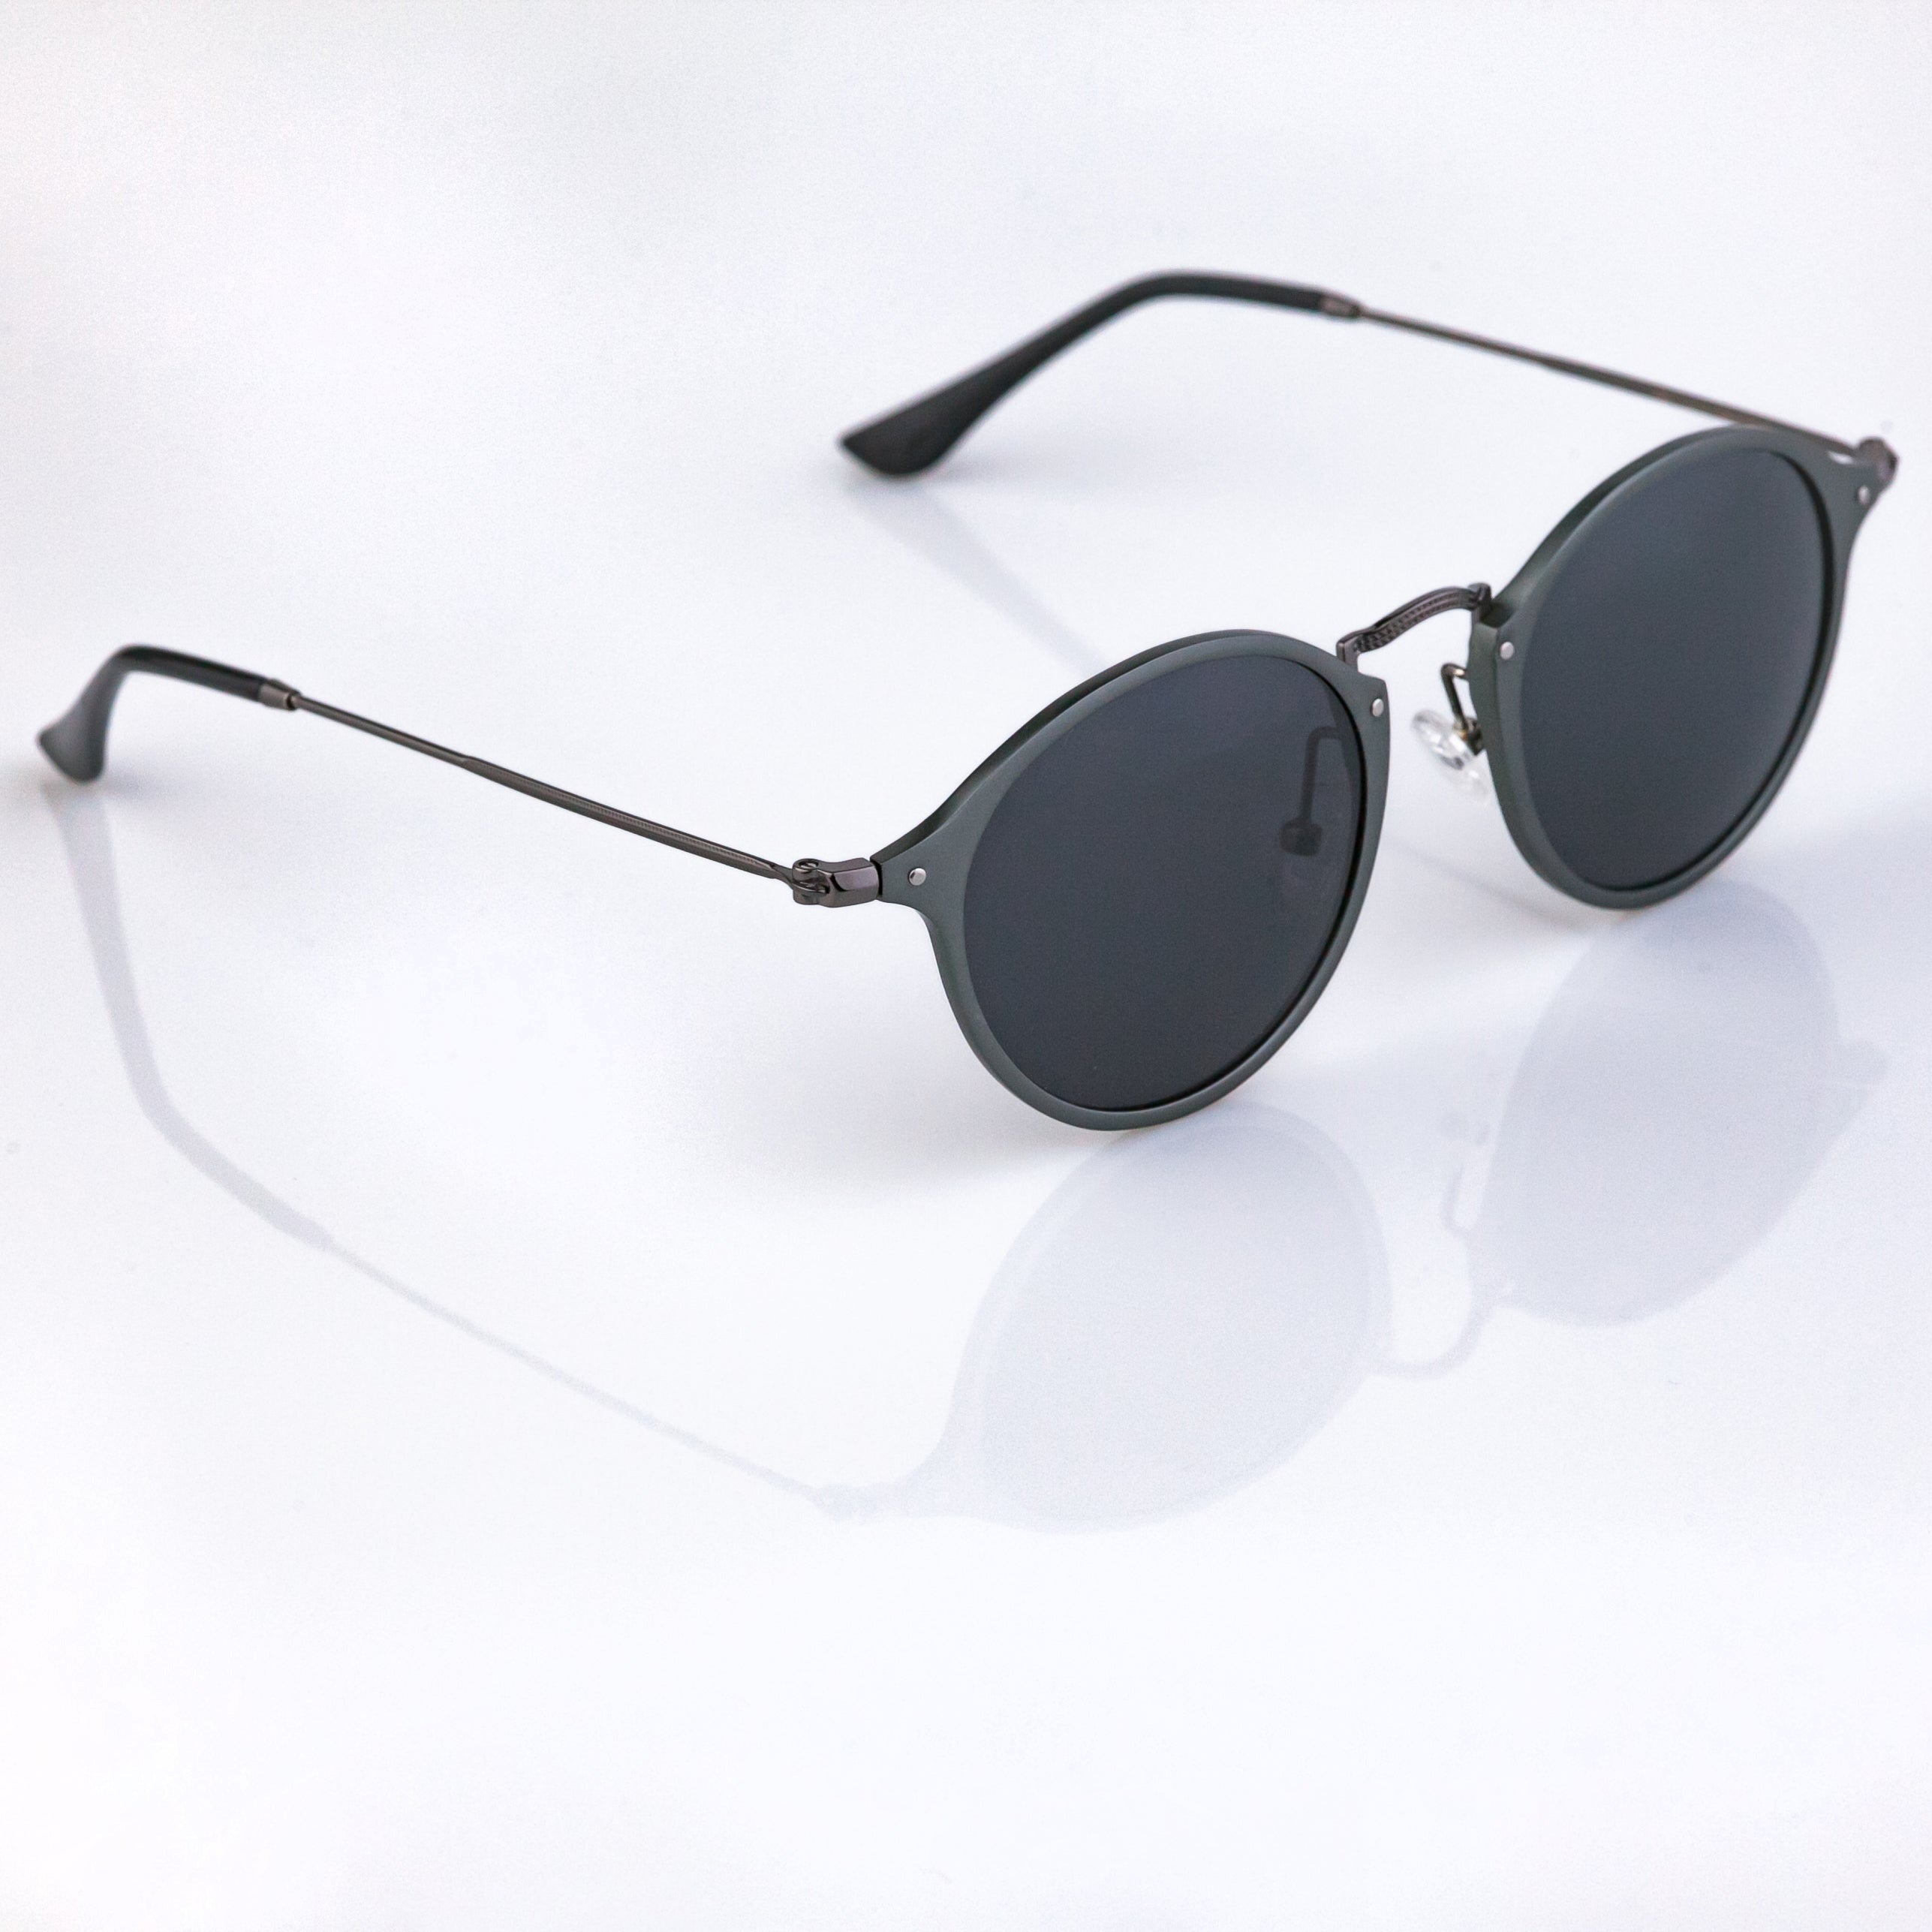 Round hipster sunglasses-id.cc58295-12.SG-80601.id.58295